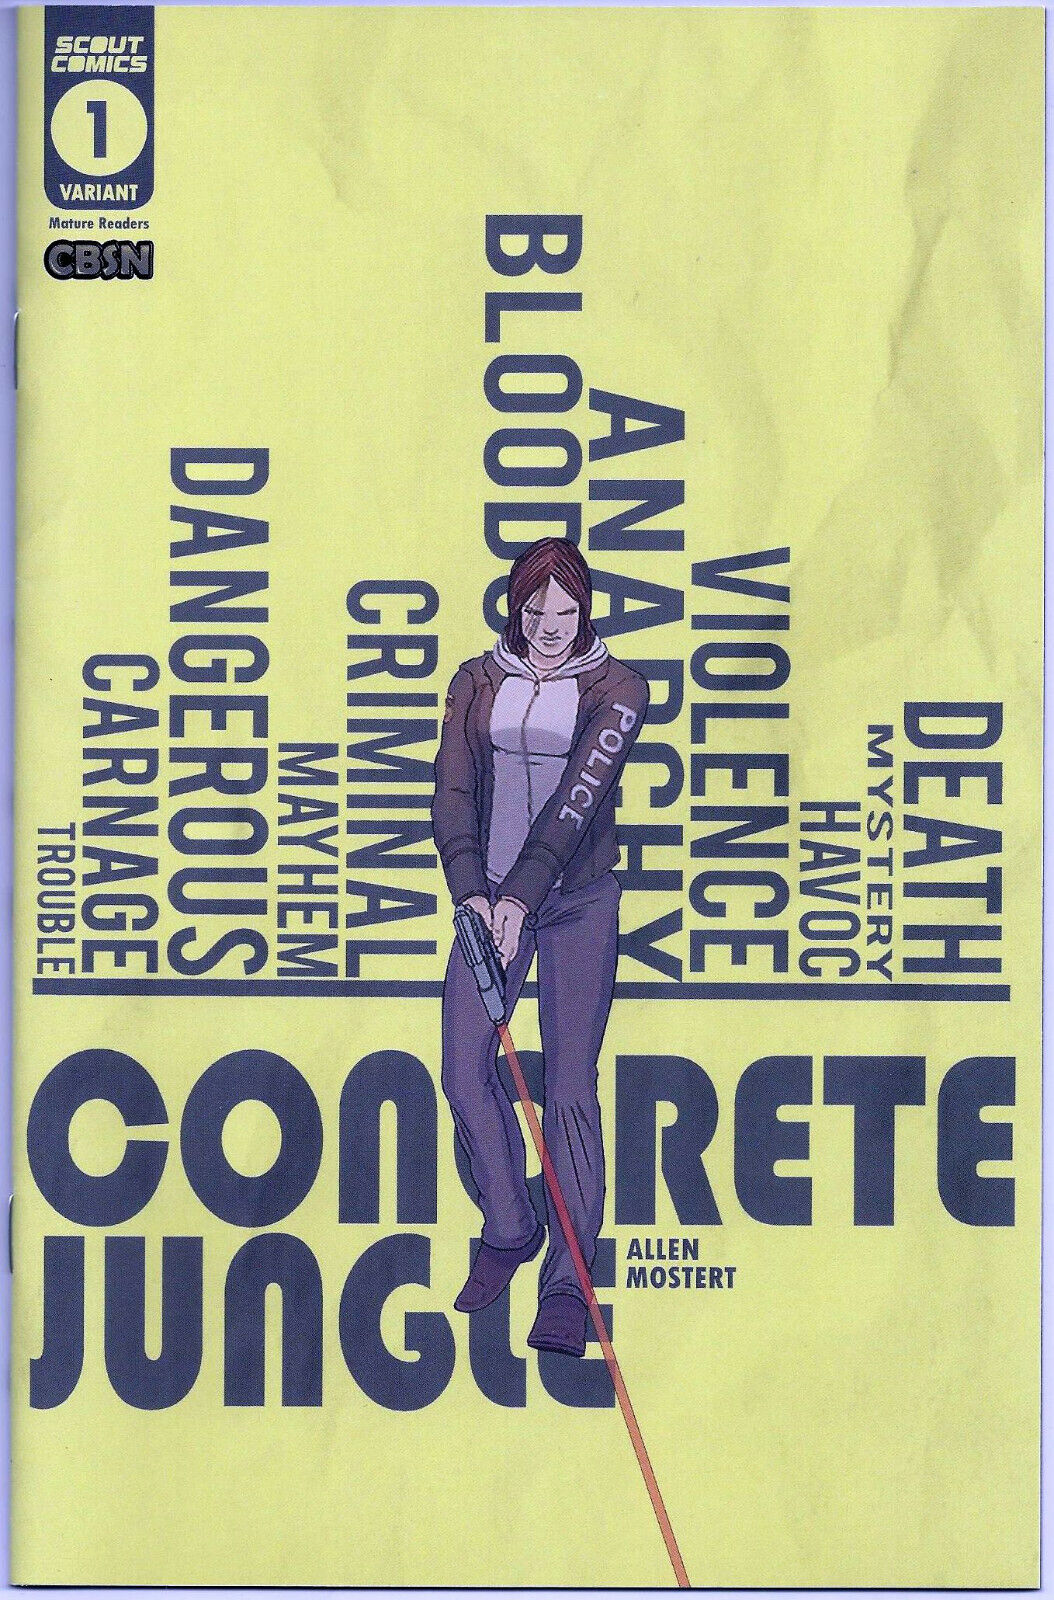 Concrete Jungle #1 - CBSN Exclusive Scout Comics - NM 